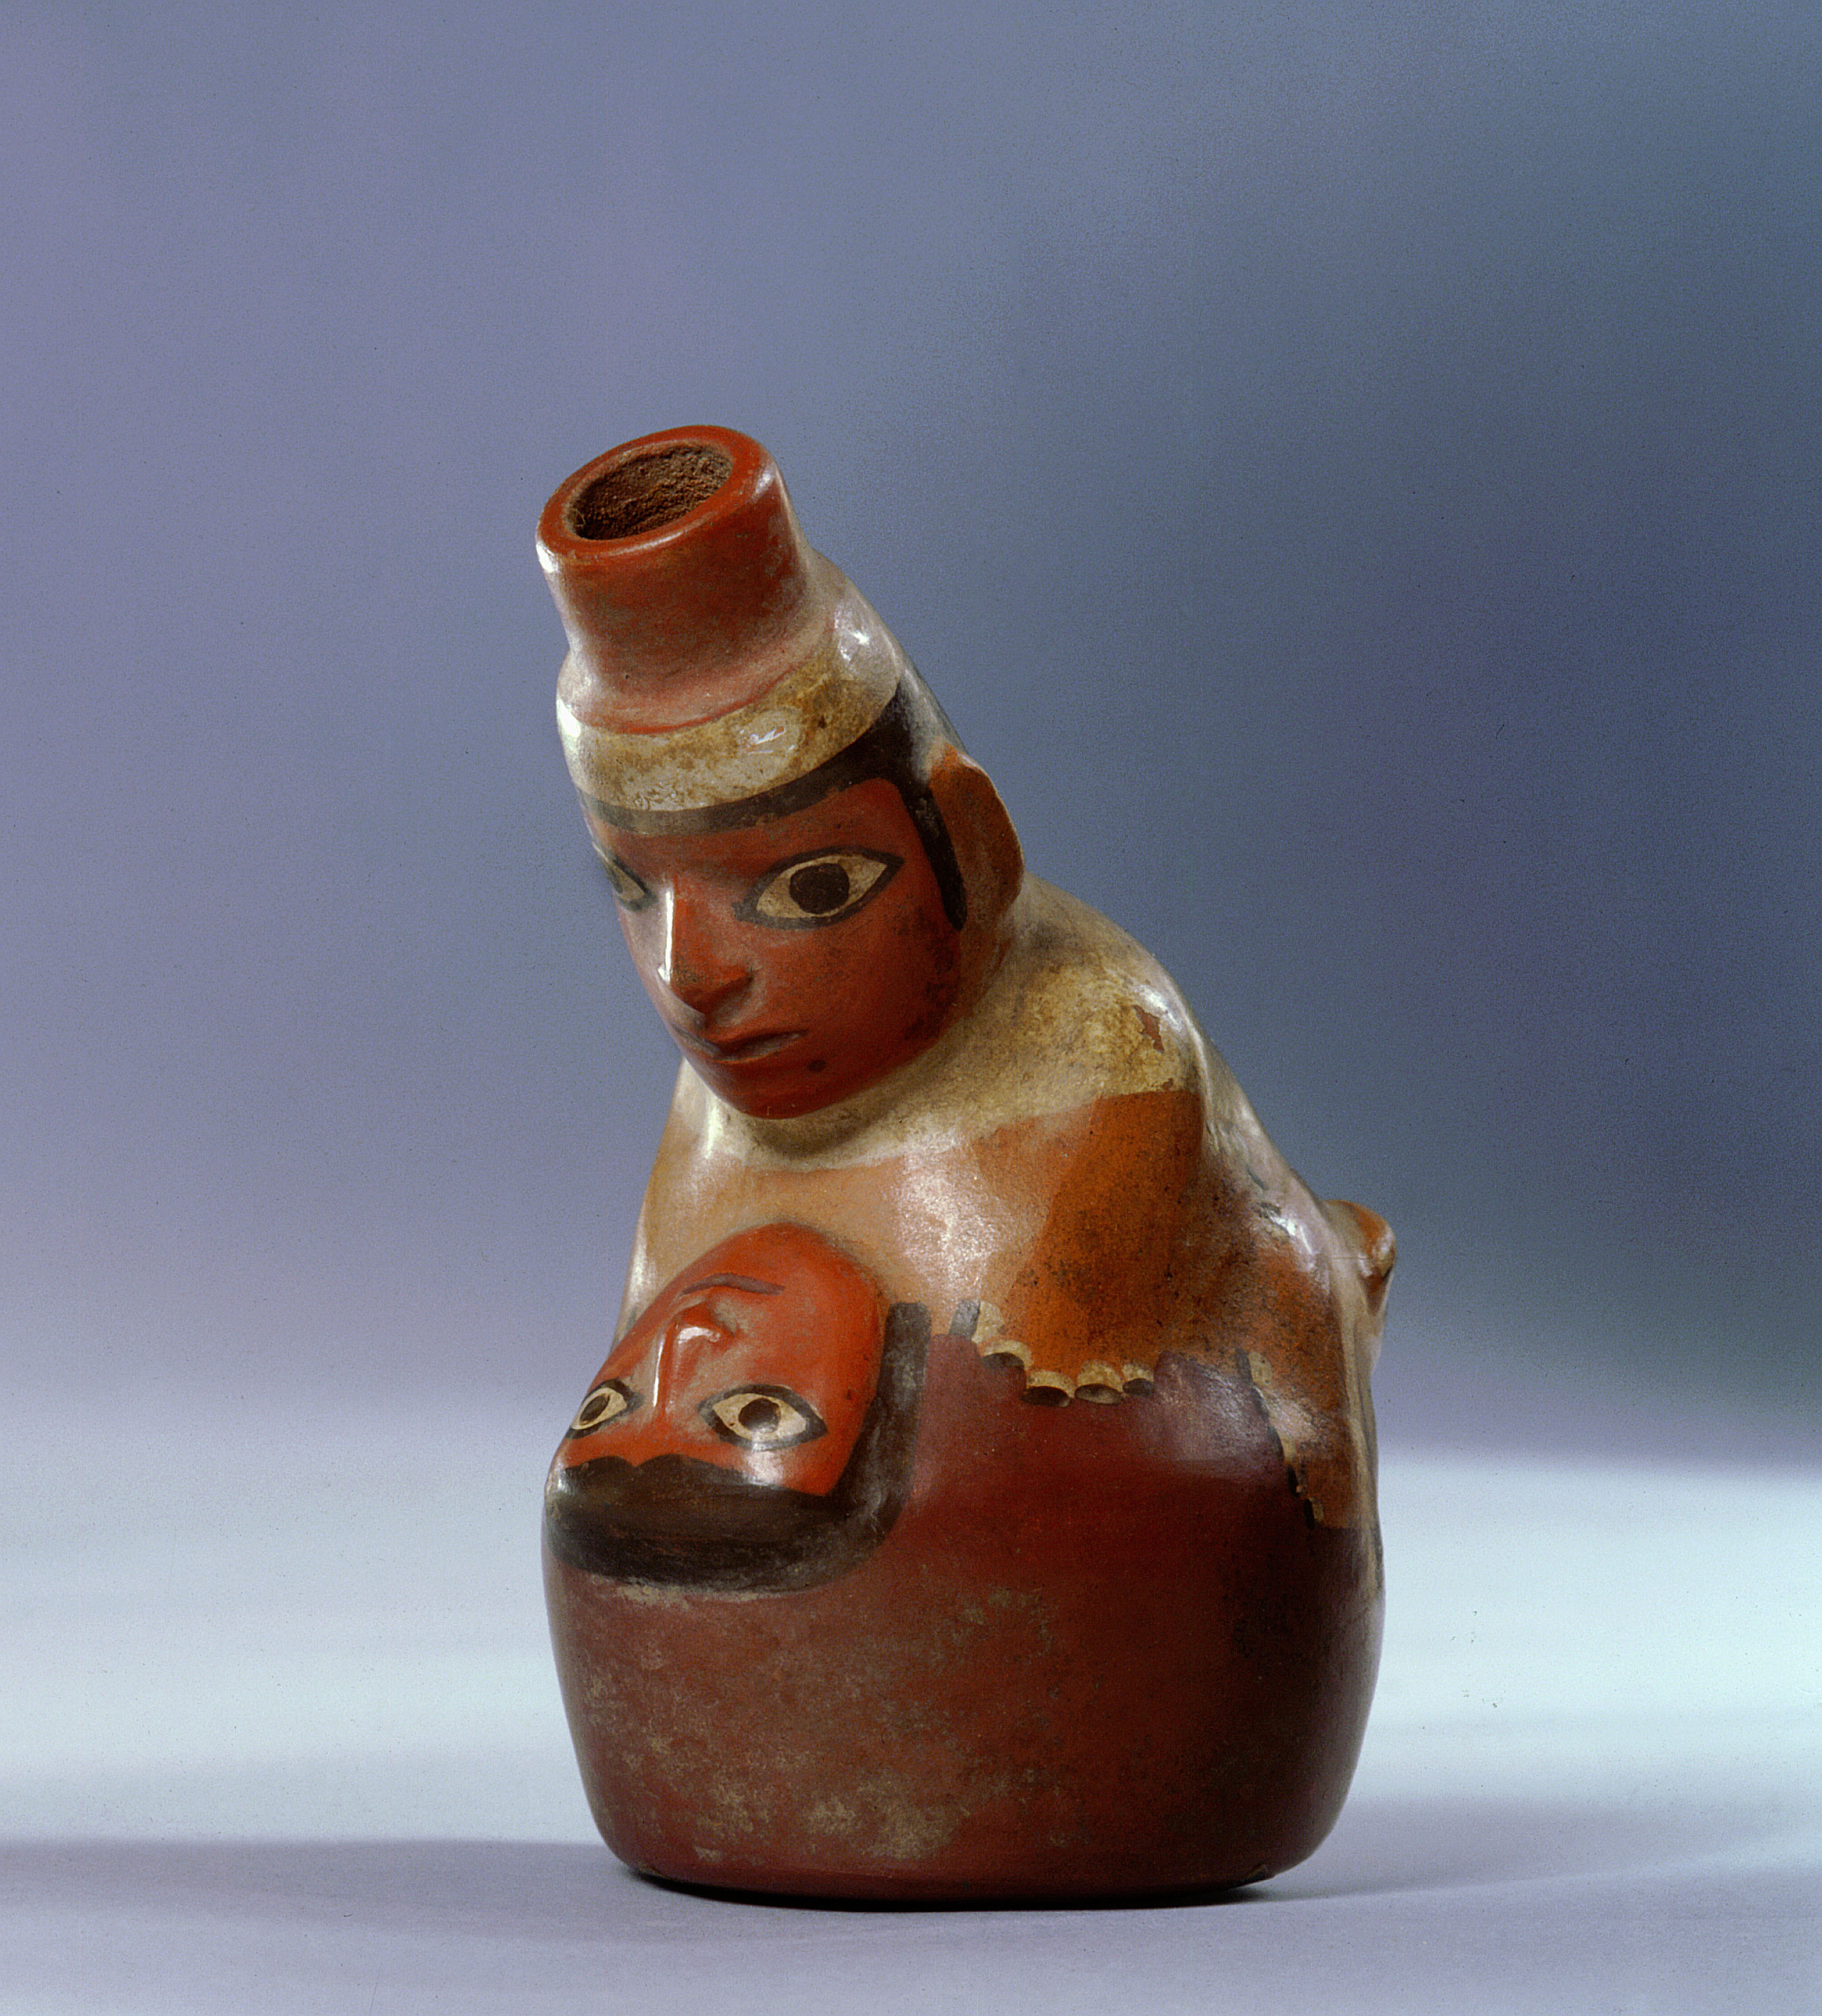 An ancient Peruvian jug